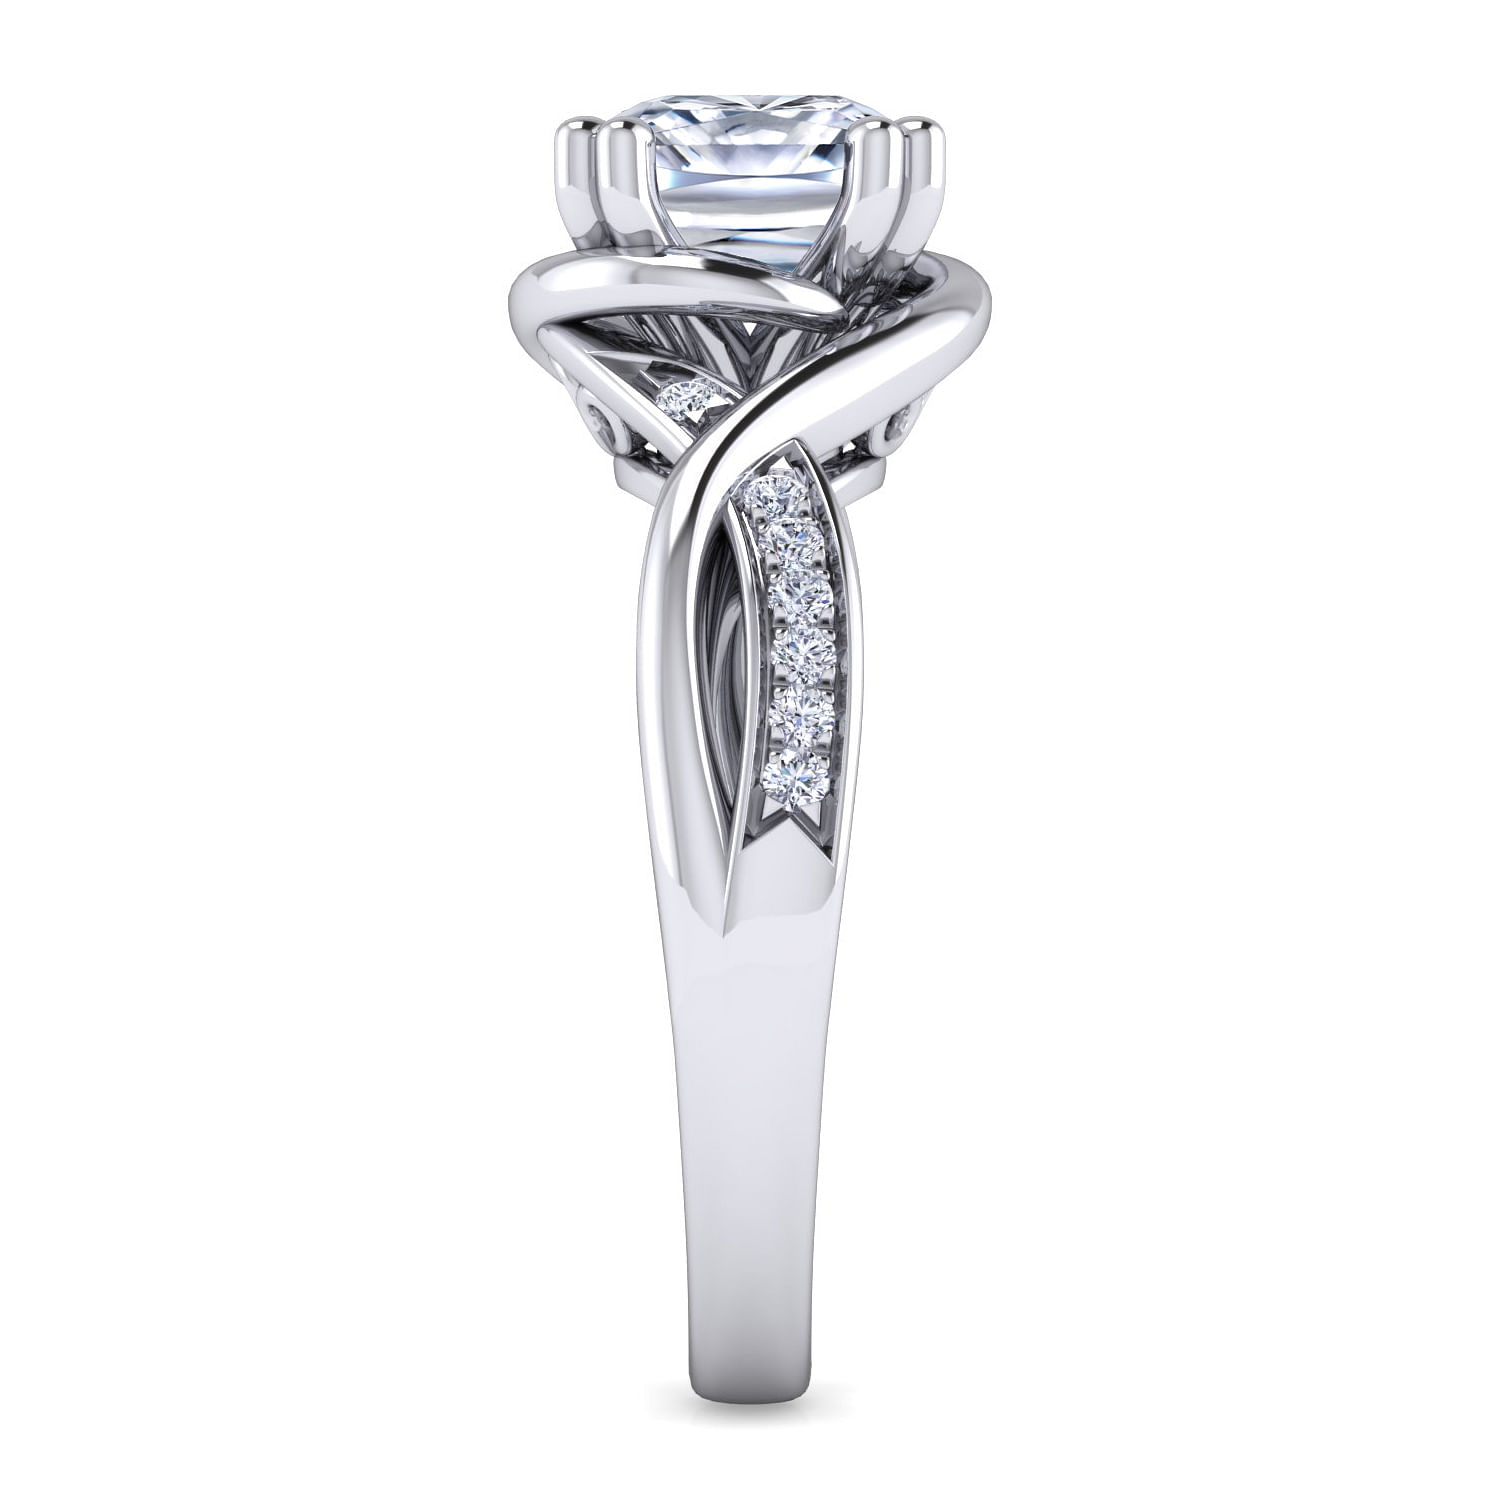 14K White Gold Twisted Cushion Cut Diamond Engagement Ring
